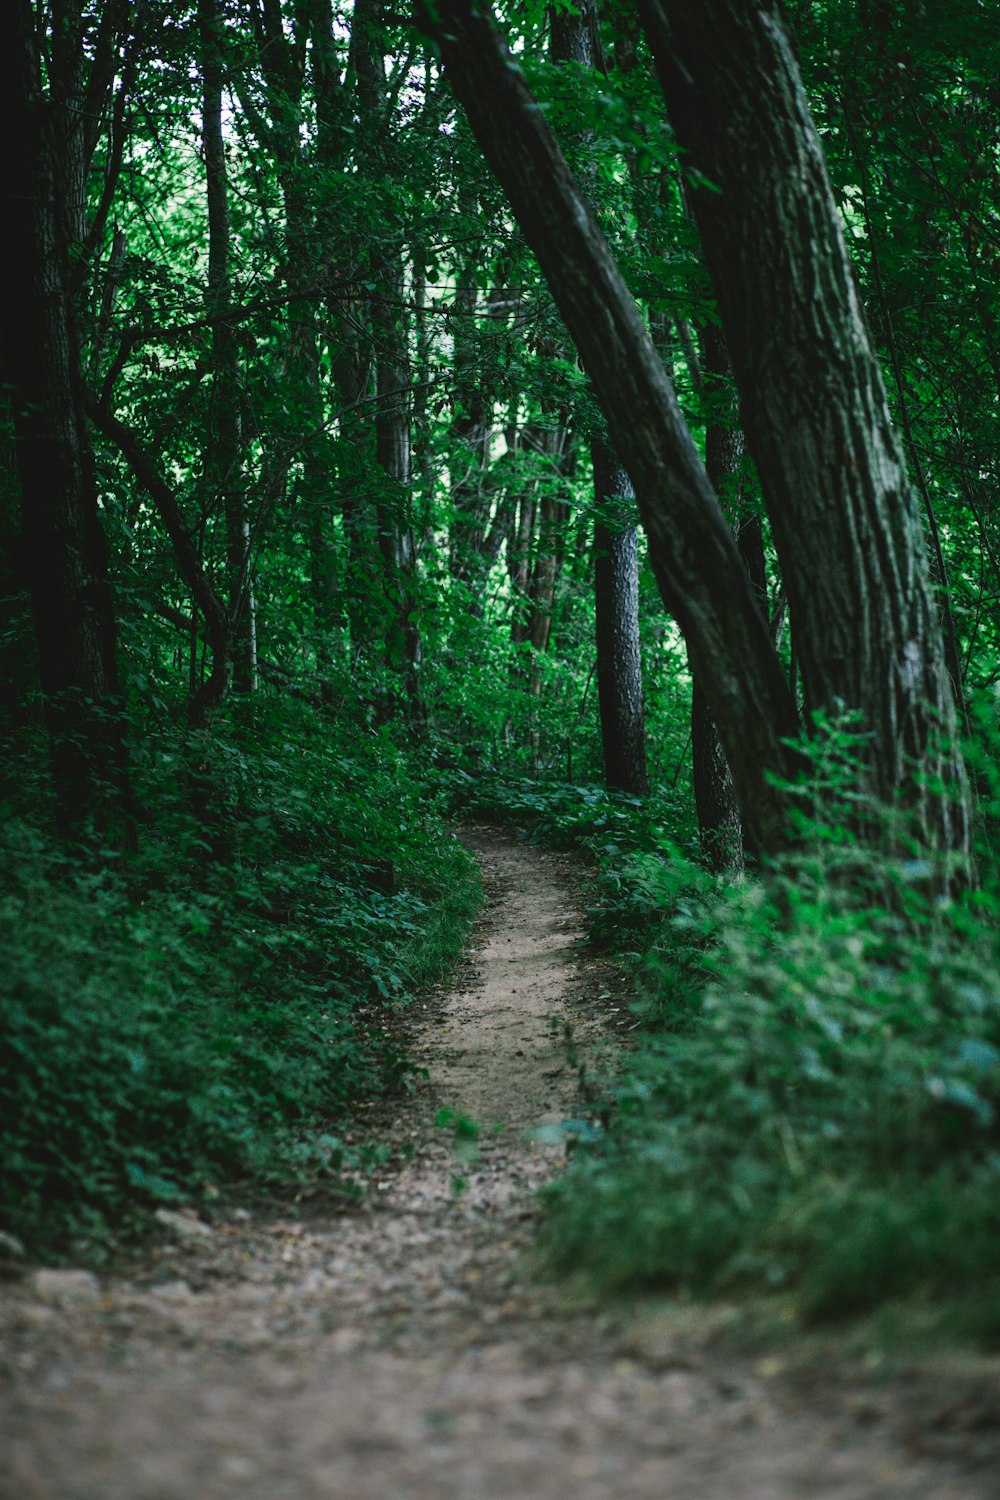 sentiero circondato da alberi